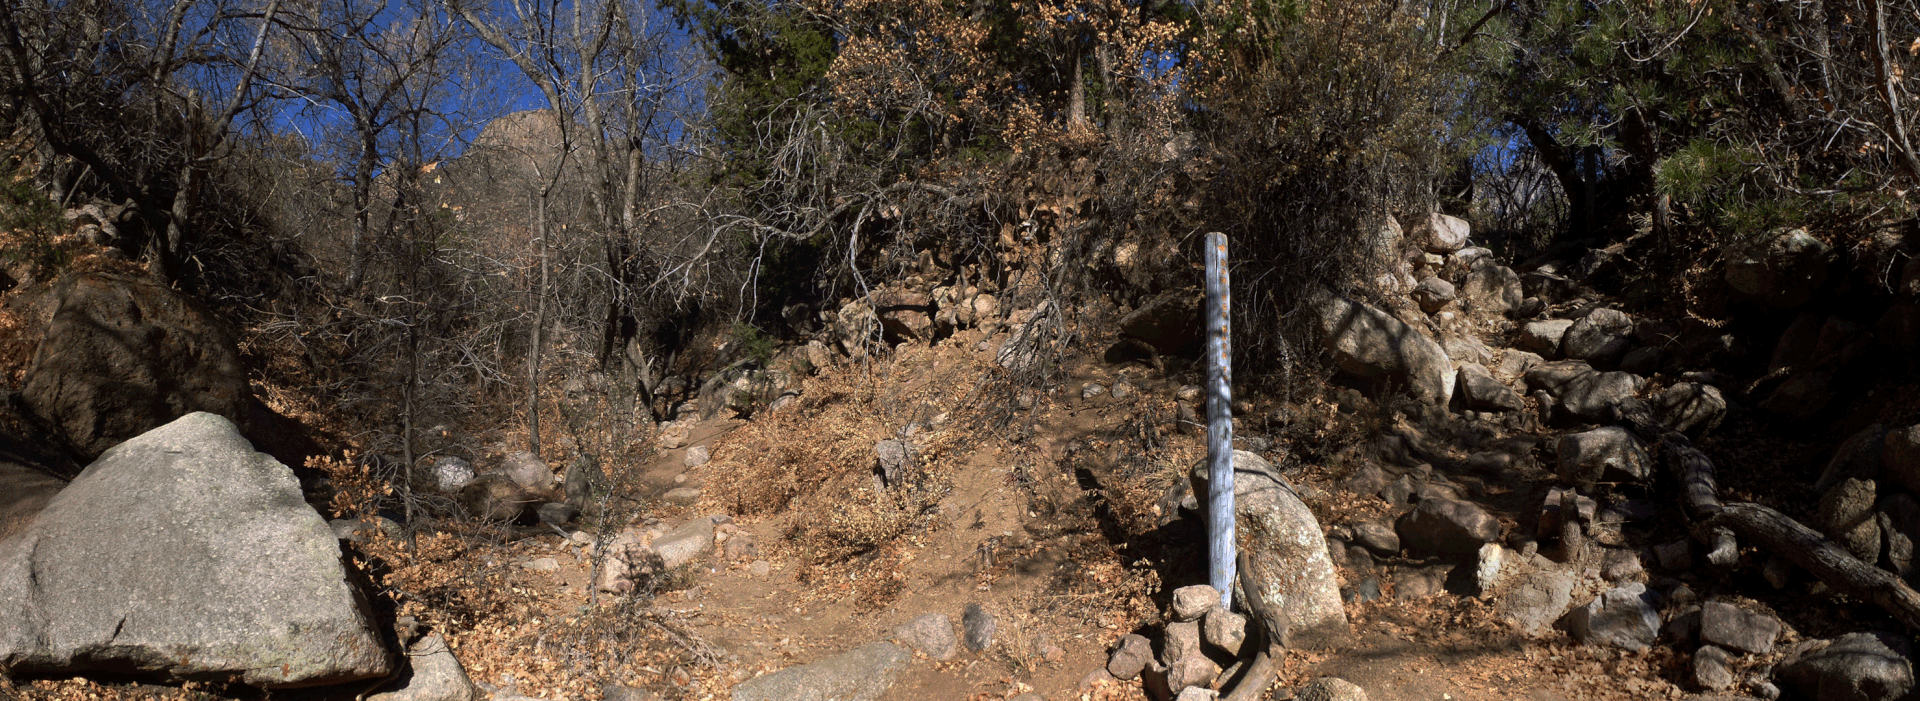 TWA Flight 260 Plane Crash Site, A Hike In The Sandia Mountains,  Albuquerque